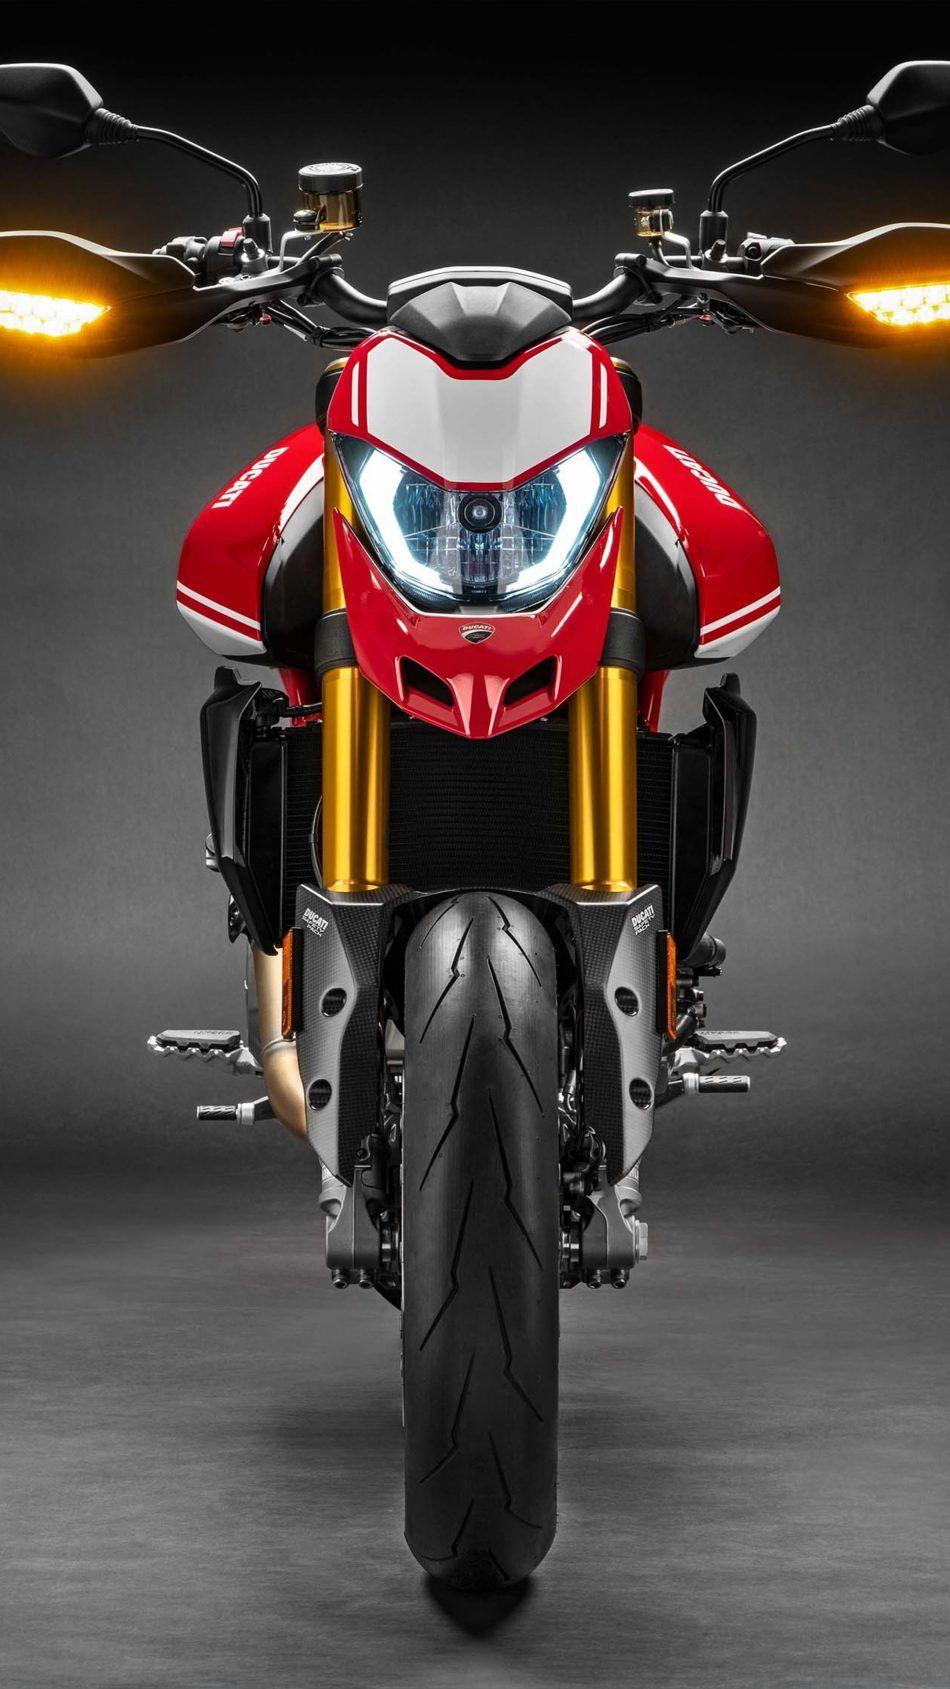 Ducati Hypermotard 950 SP. Bike Wallpaper. Ducati